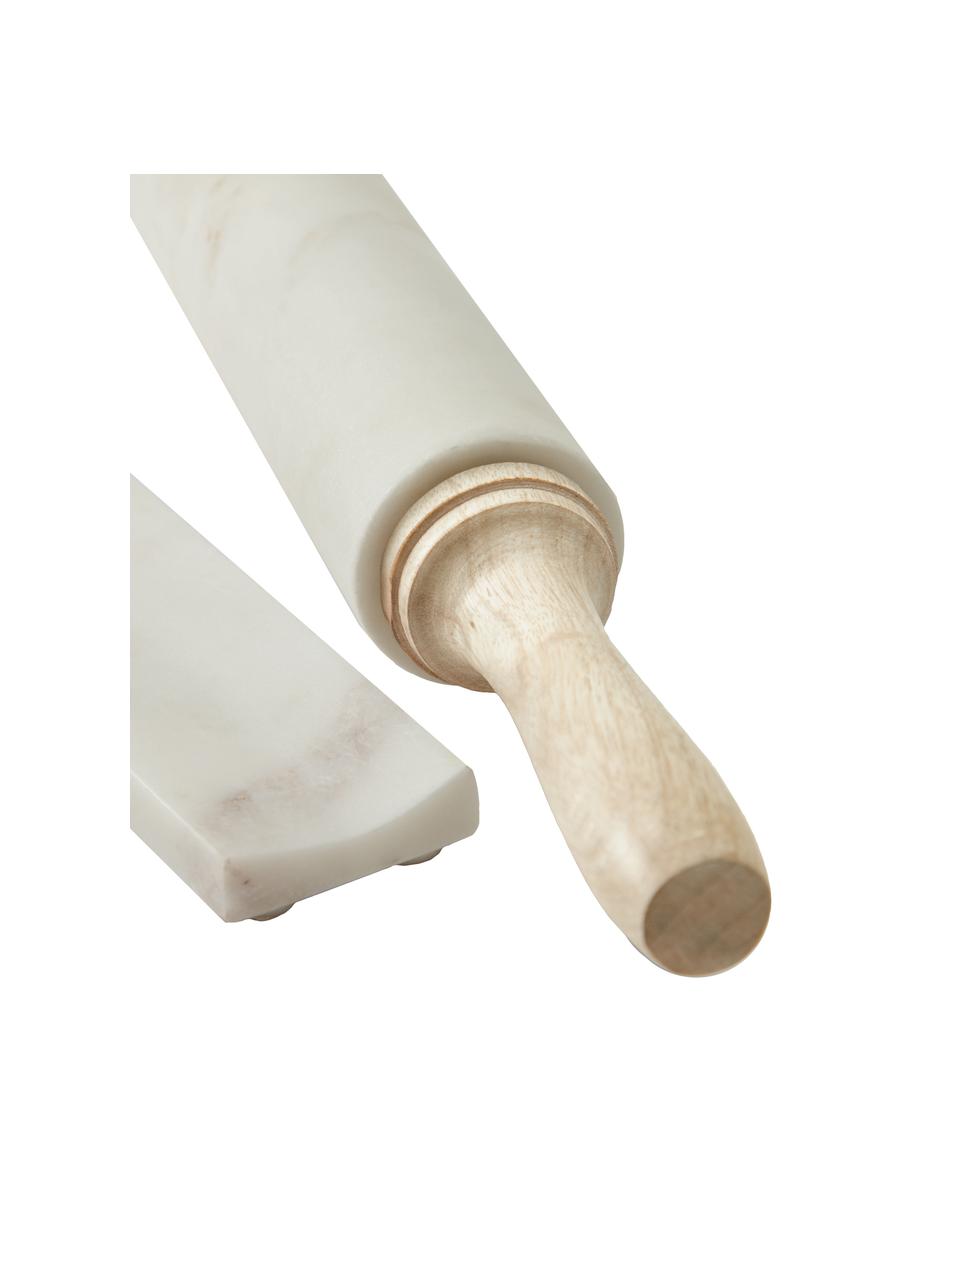 Marmor-Nudelholz mit Auflage Aimil, Griffe: Holz, Weiß, marmoriert, Holz, Ø 7 x L 41 cm